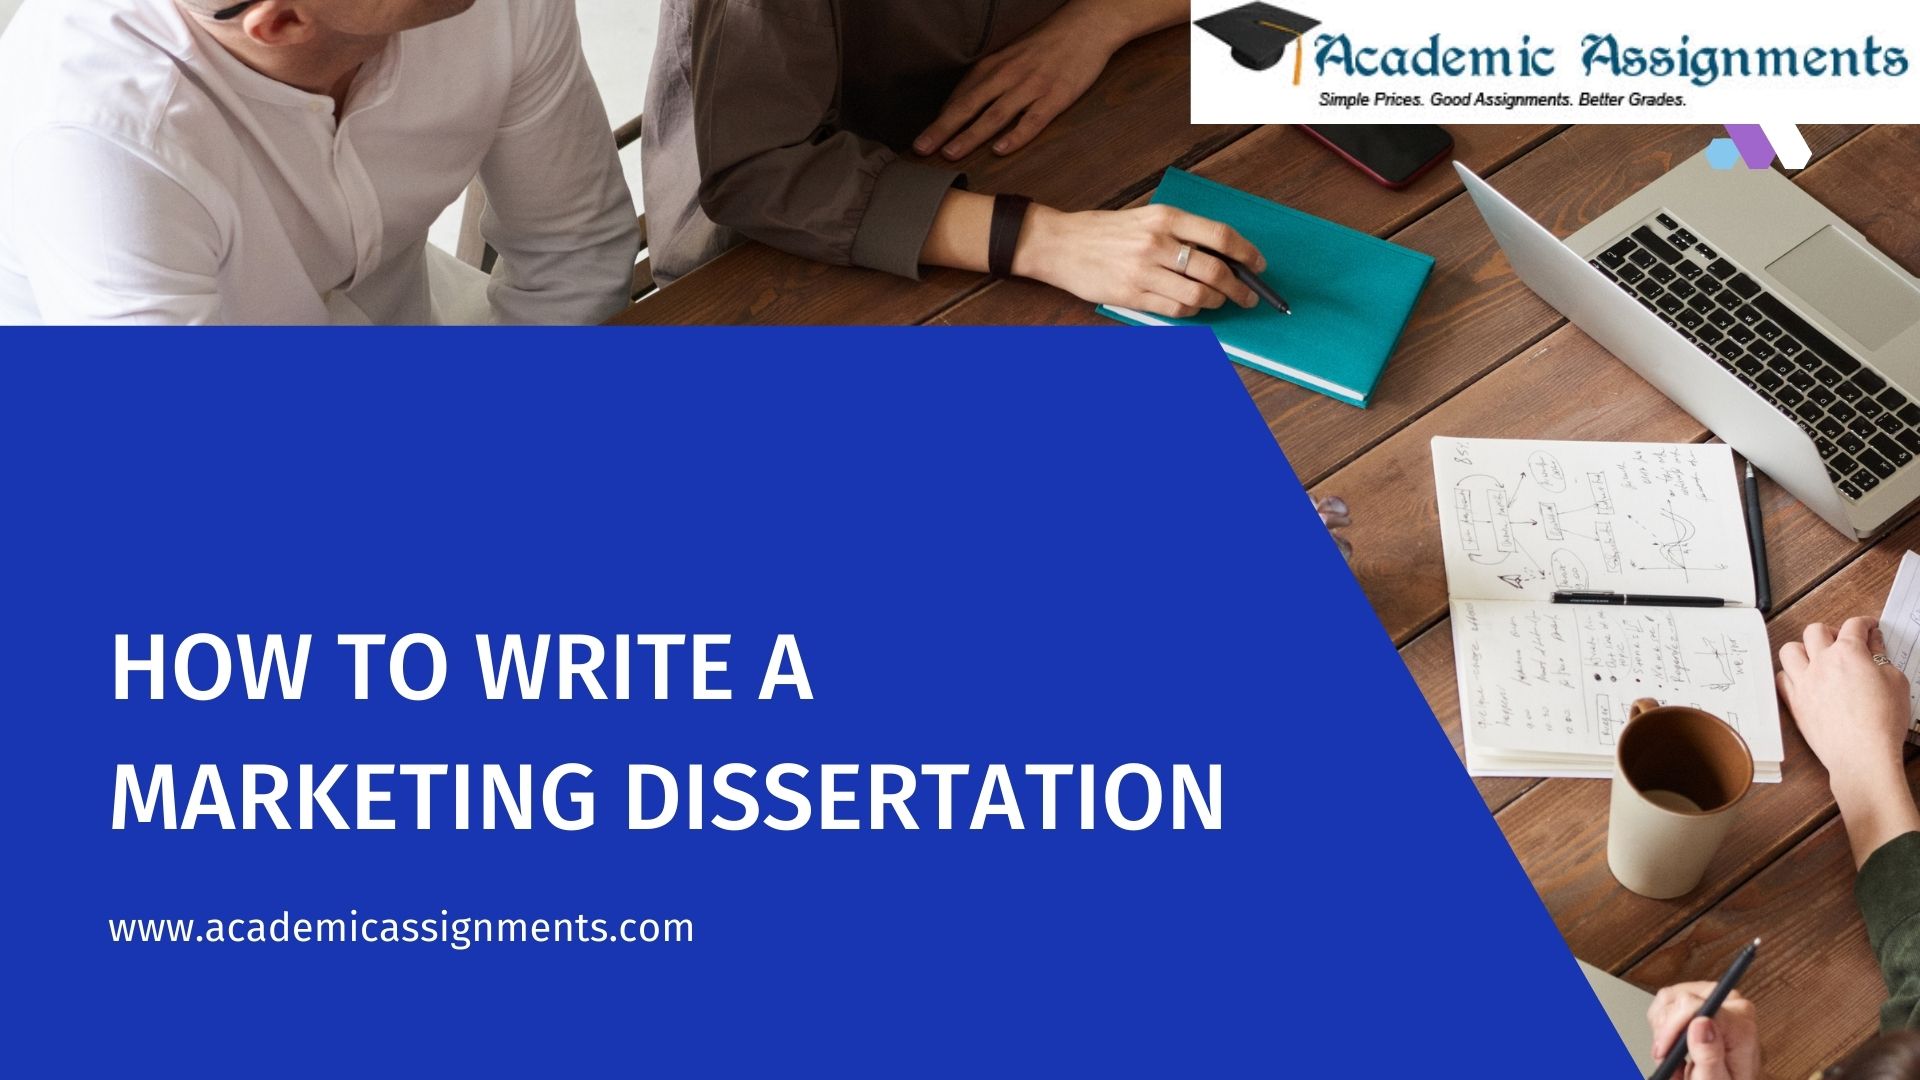 HOW TO WRITE A MARKETING DISSERTATION